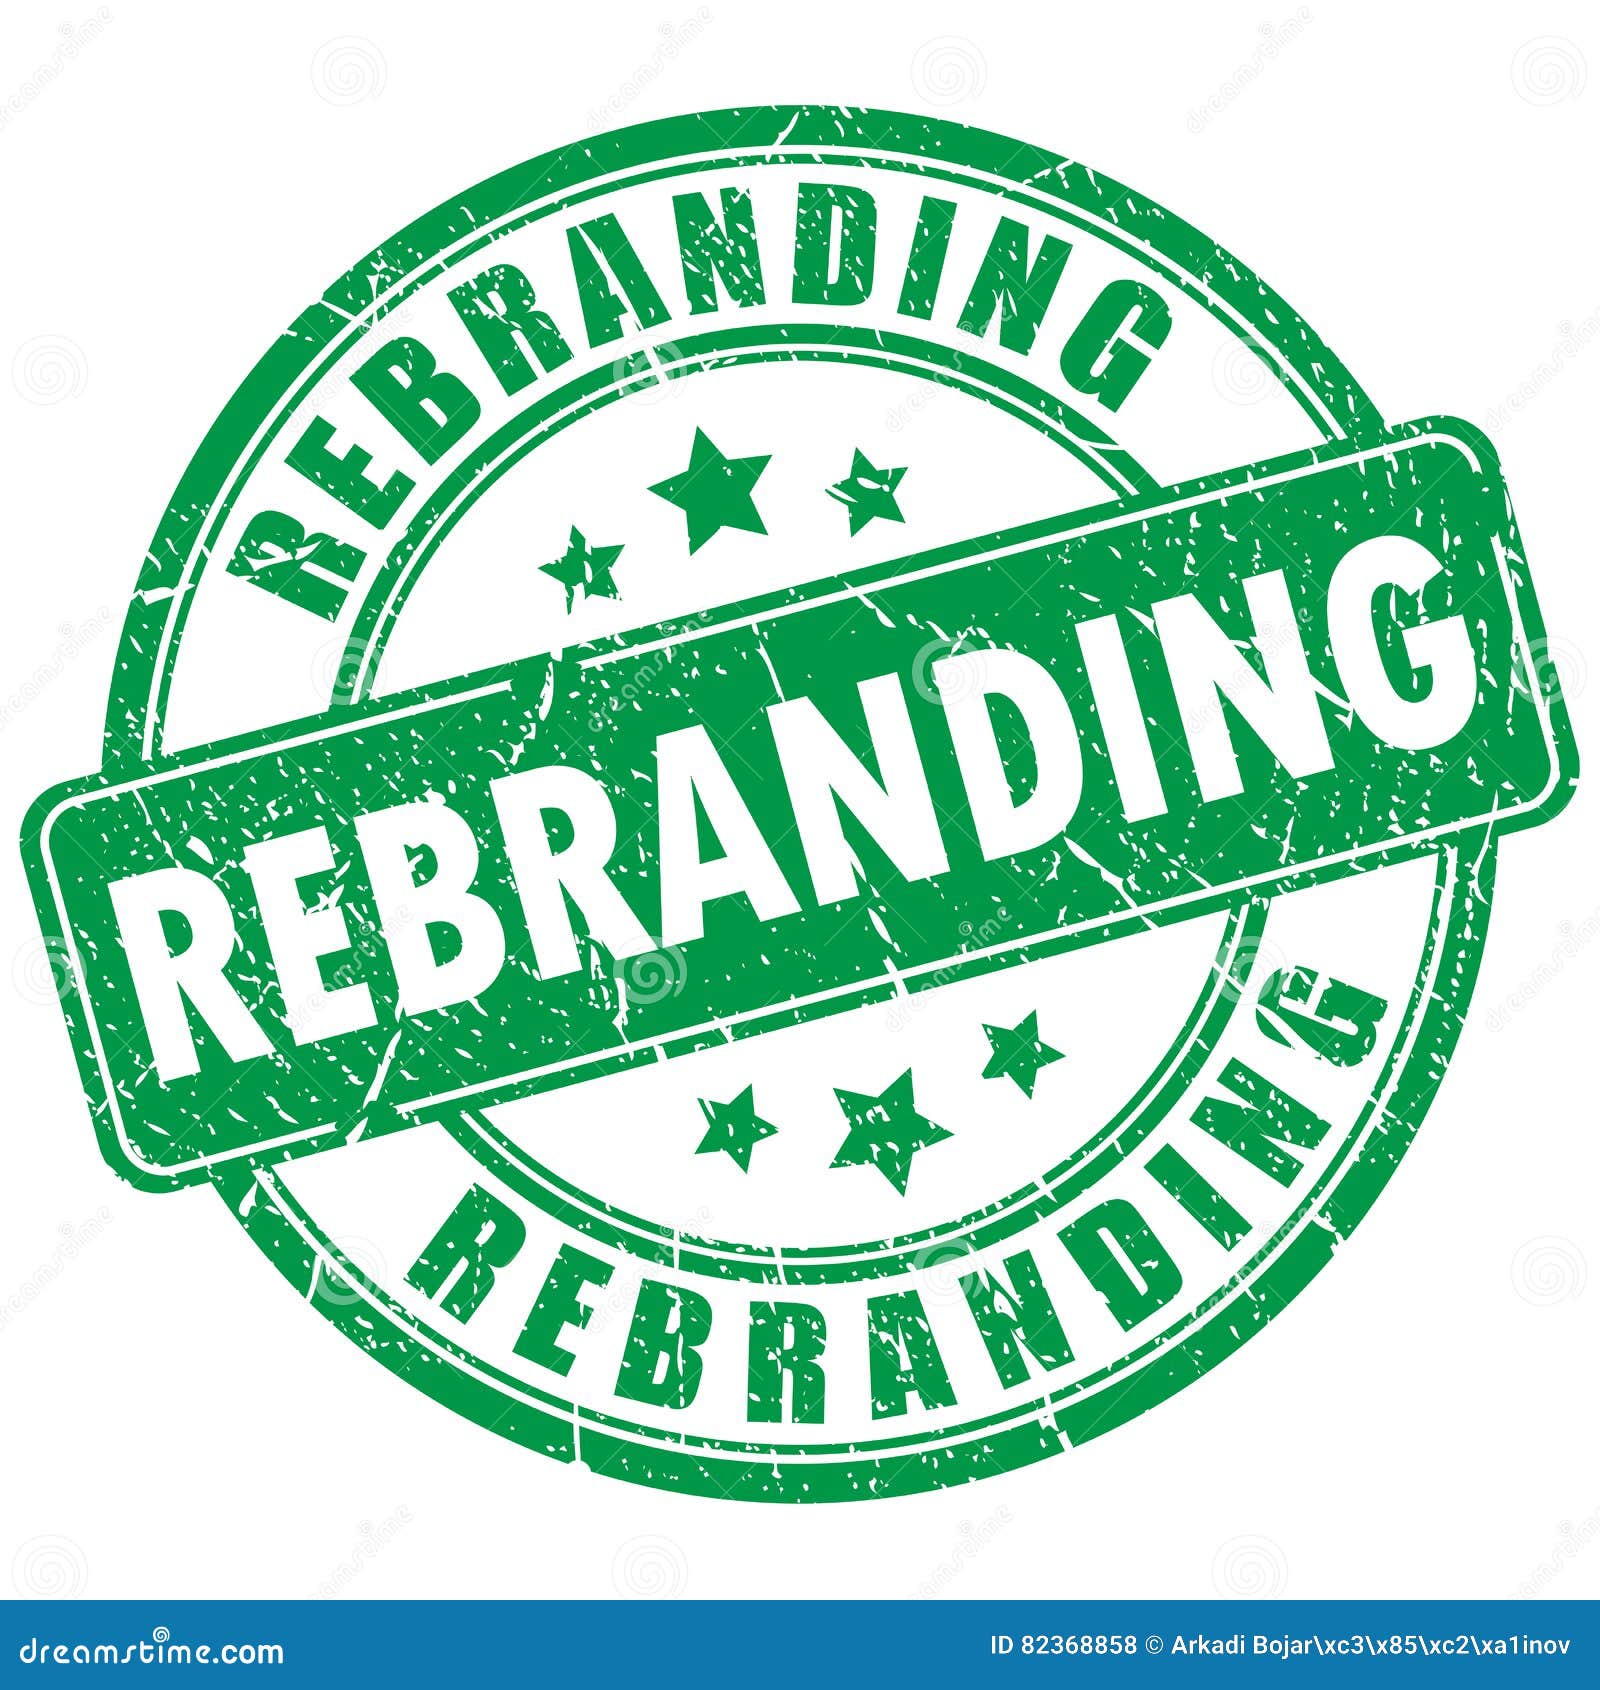 rebranding rubber  stamp